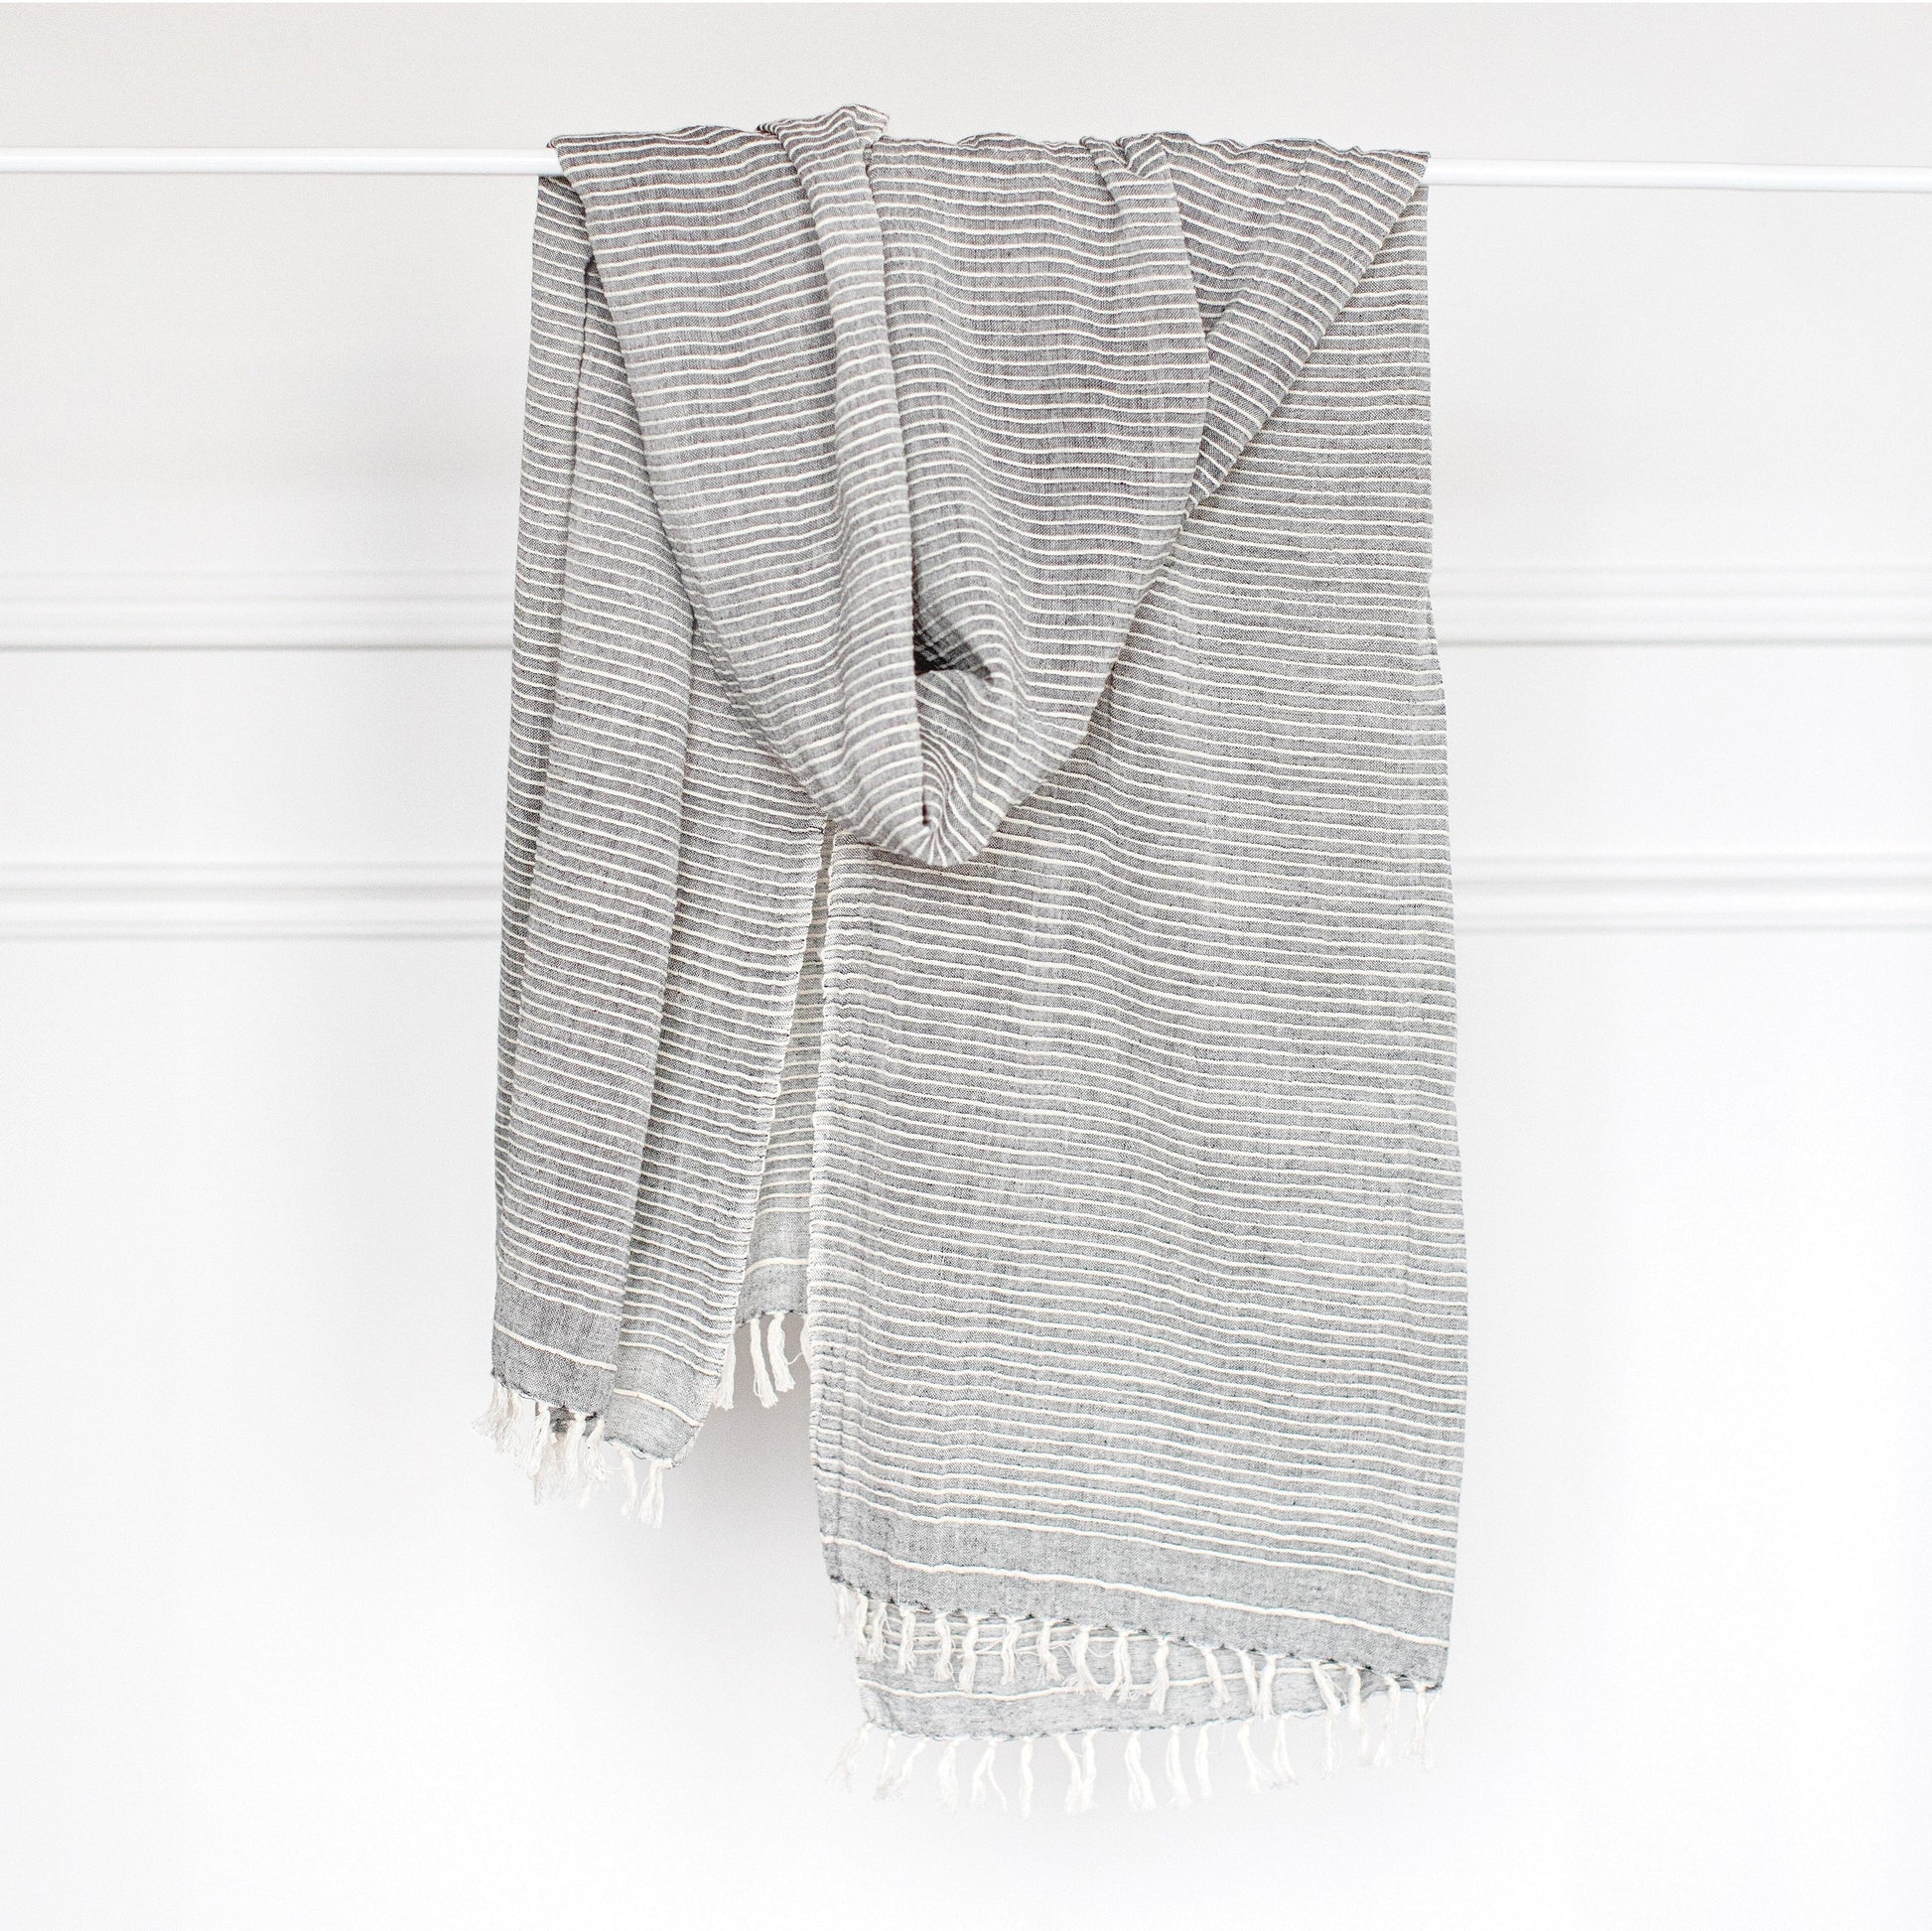 Judith shawl shawl sabahar Grey 